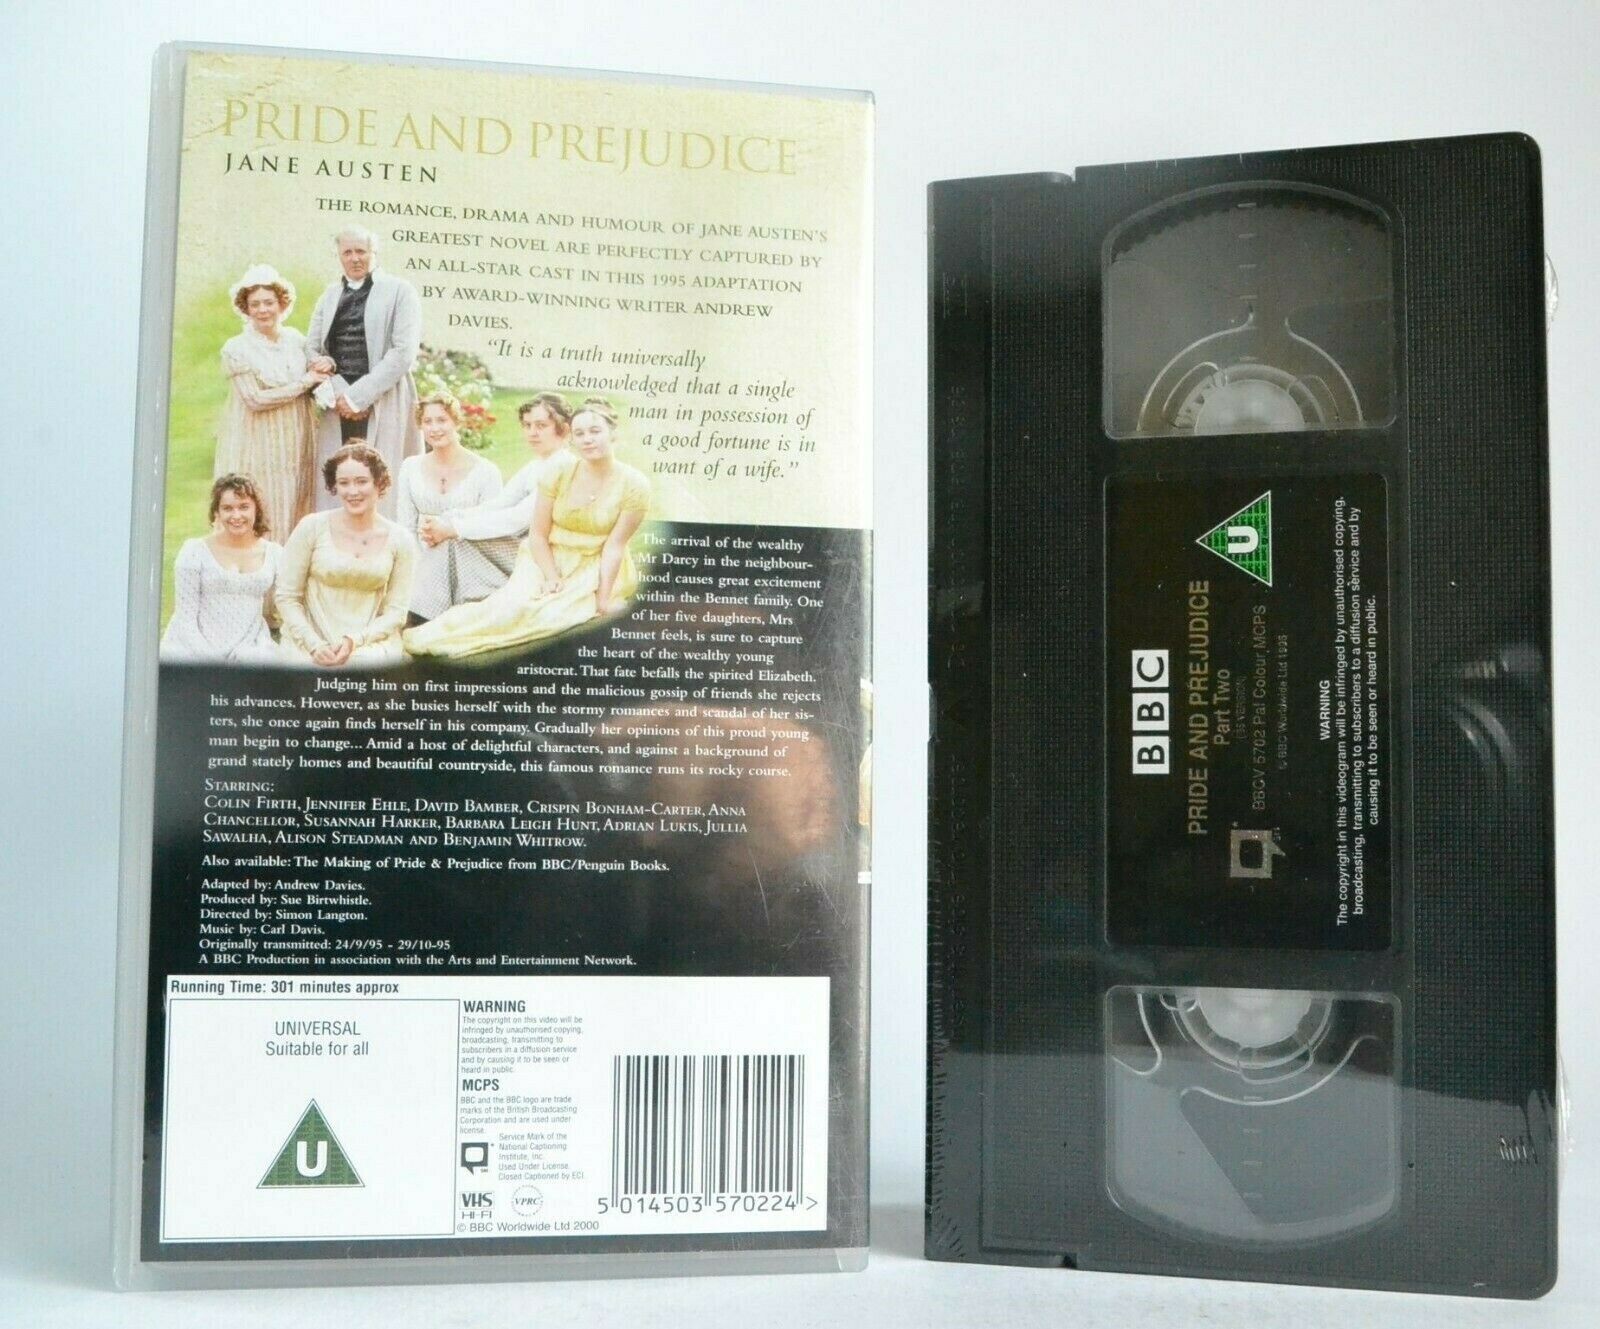 Pride And Prejudice: By Jane Austen - Brand New Sealed - BBC TV Drama - Pal VHS-